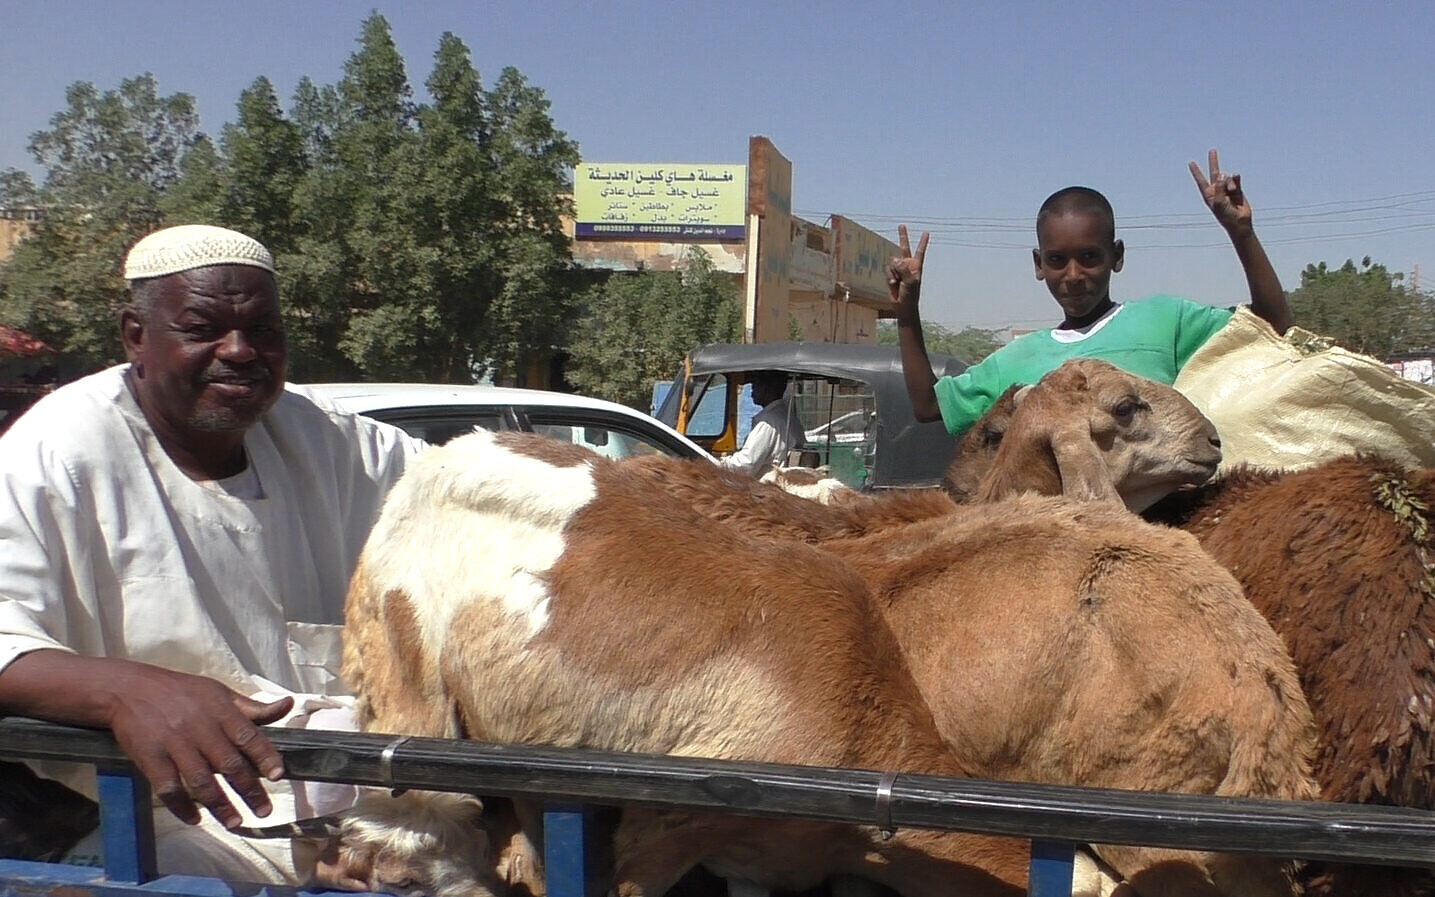 A boy waves on the back of a cattle truck in Khartoum, Sudan, November 2020. (Ziv Genesove)